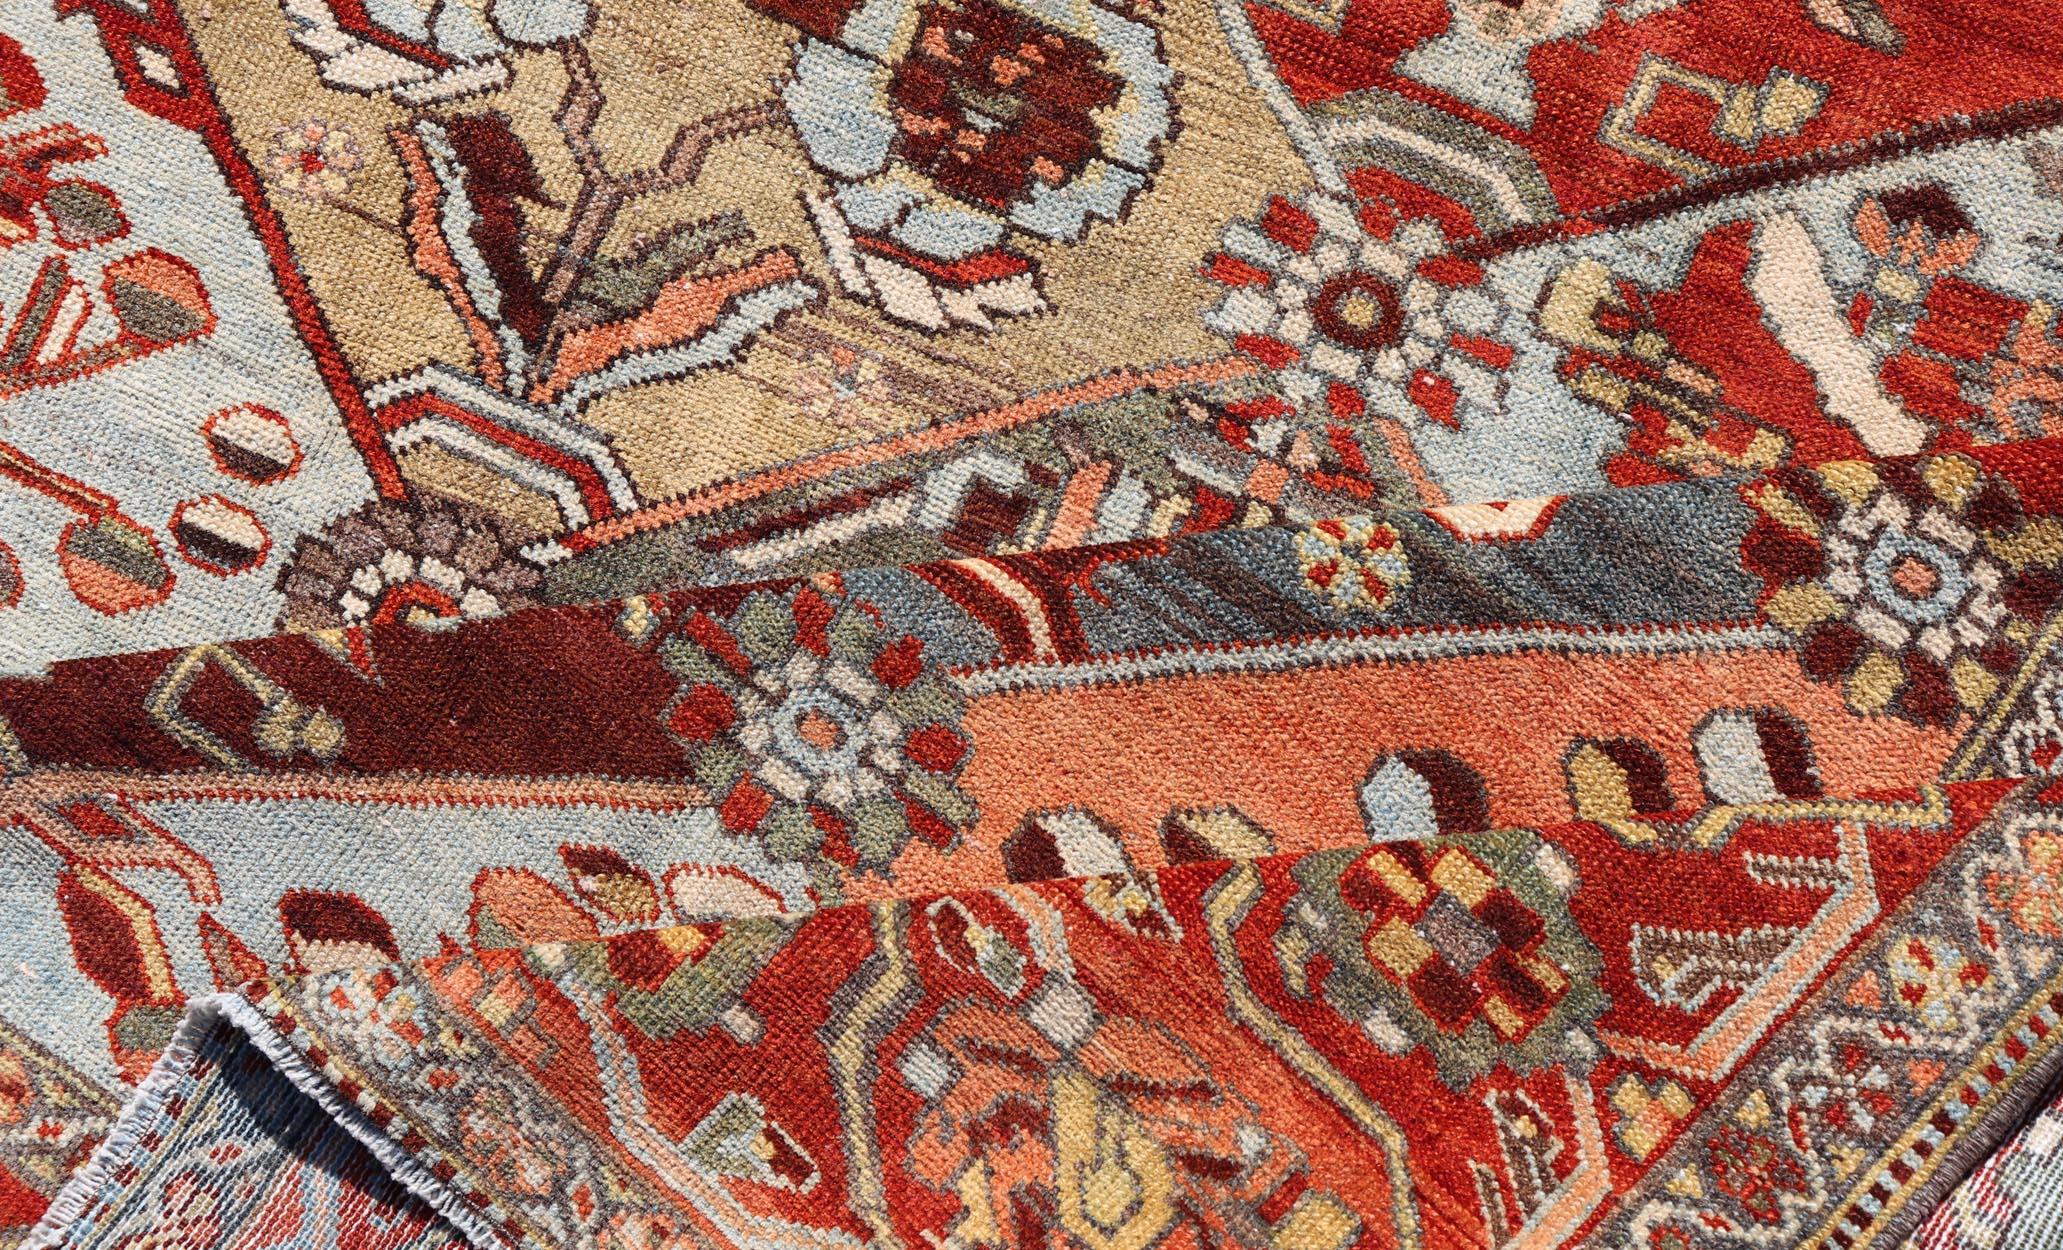 Antique Persian Bakhitari Colorful Rug in All-Over Diamond Garden Design  For Sale 4